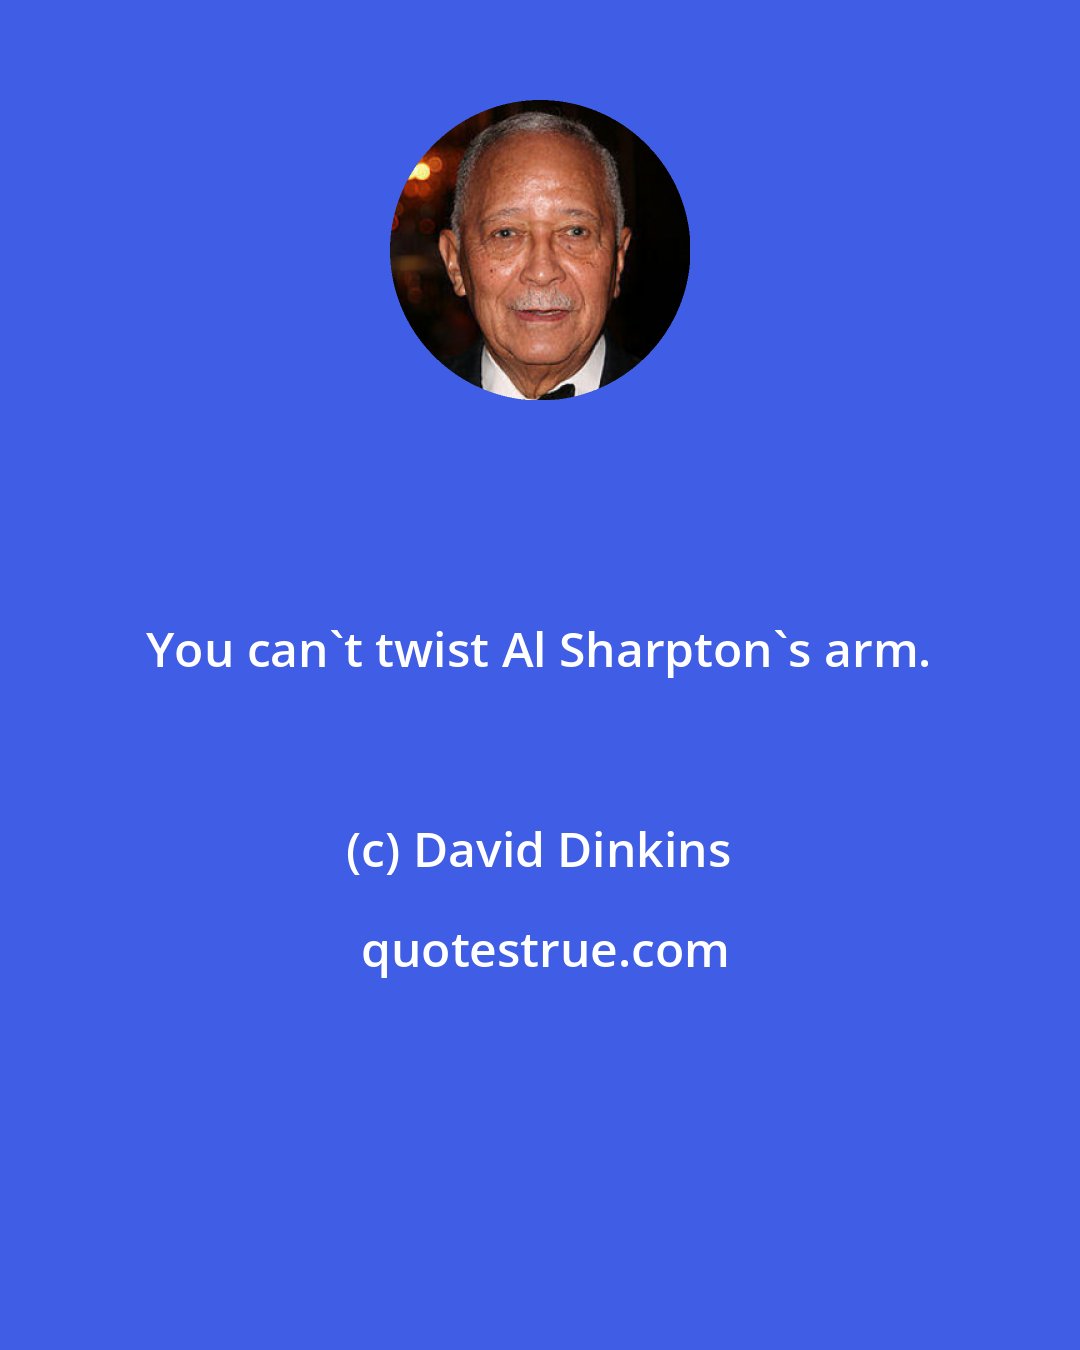 David Dinkins: You can't twist Al Sharpton's arm.